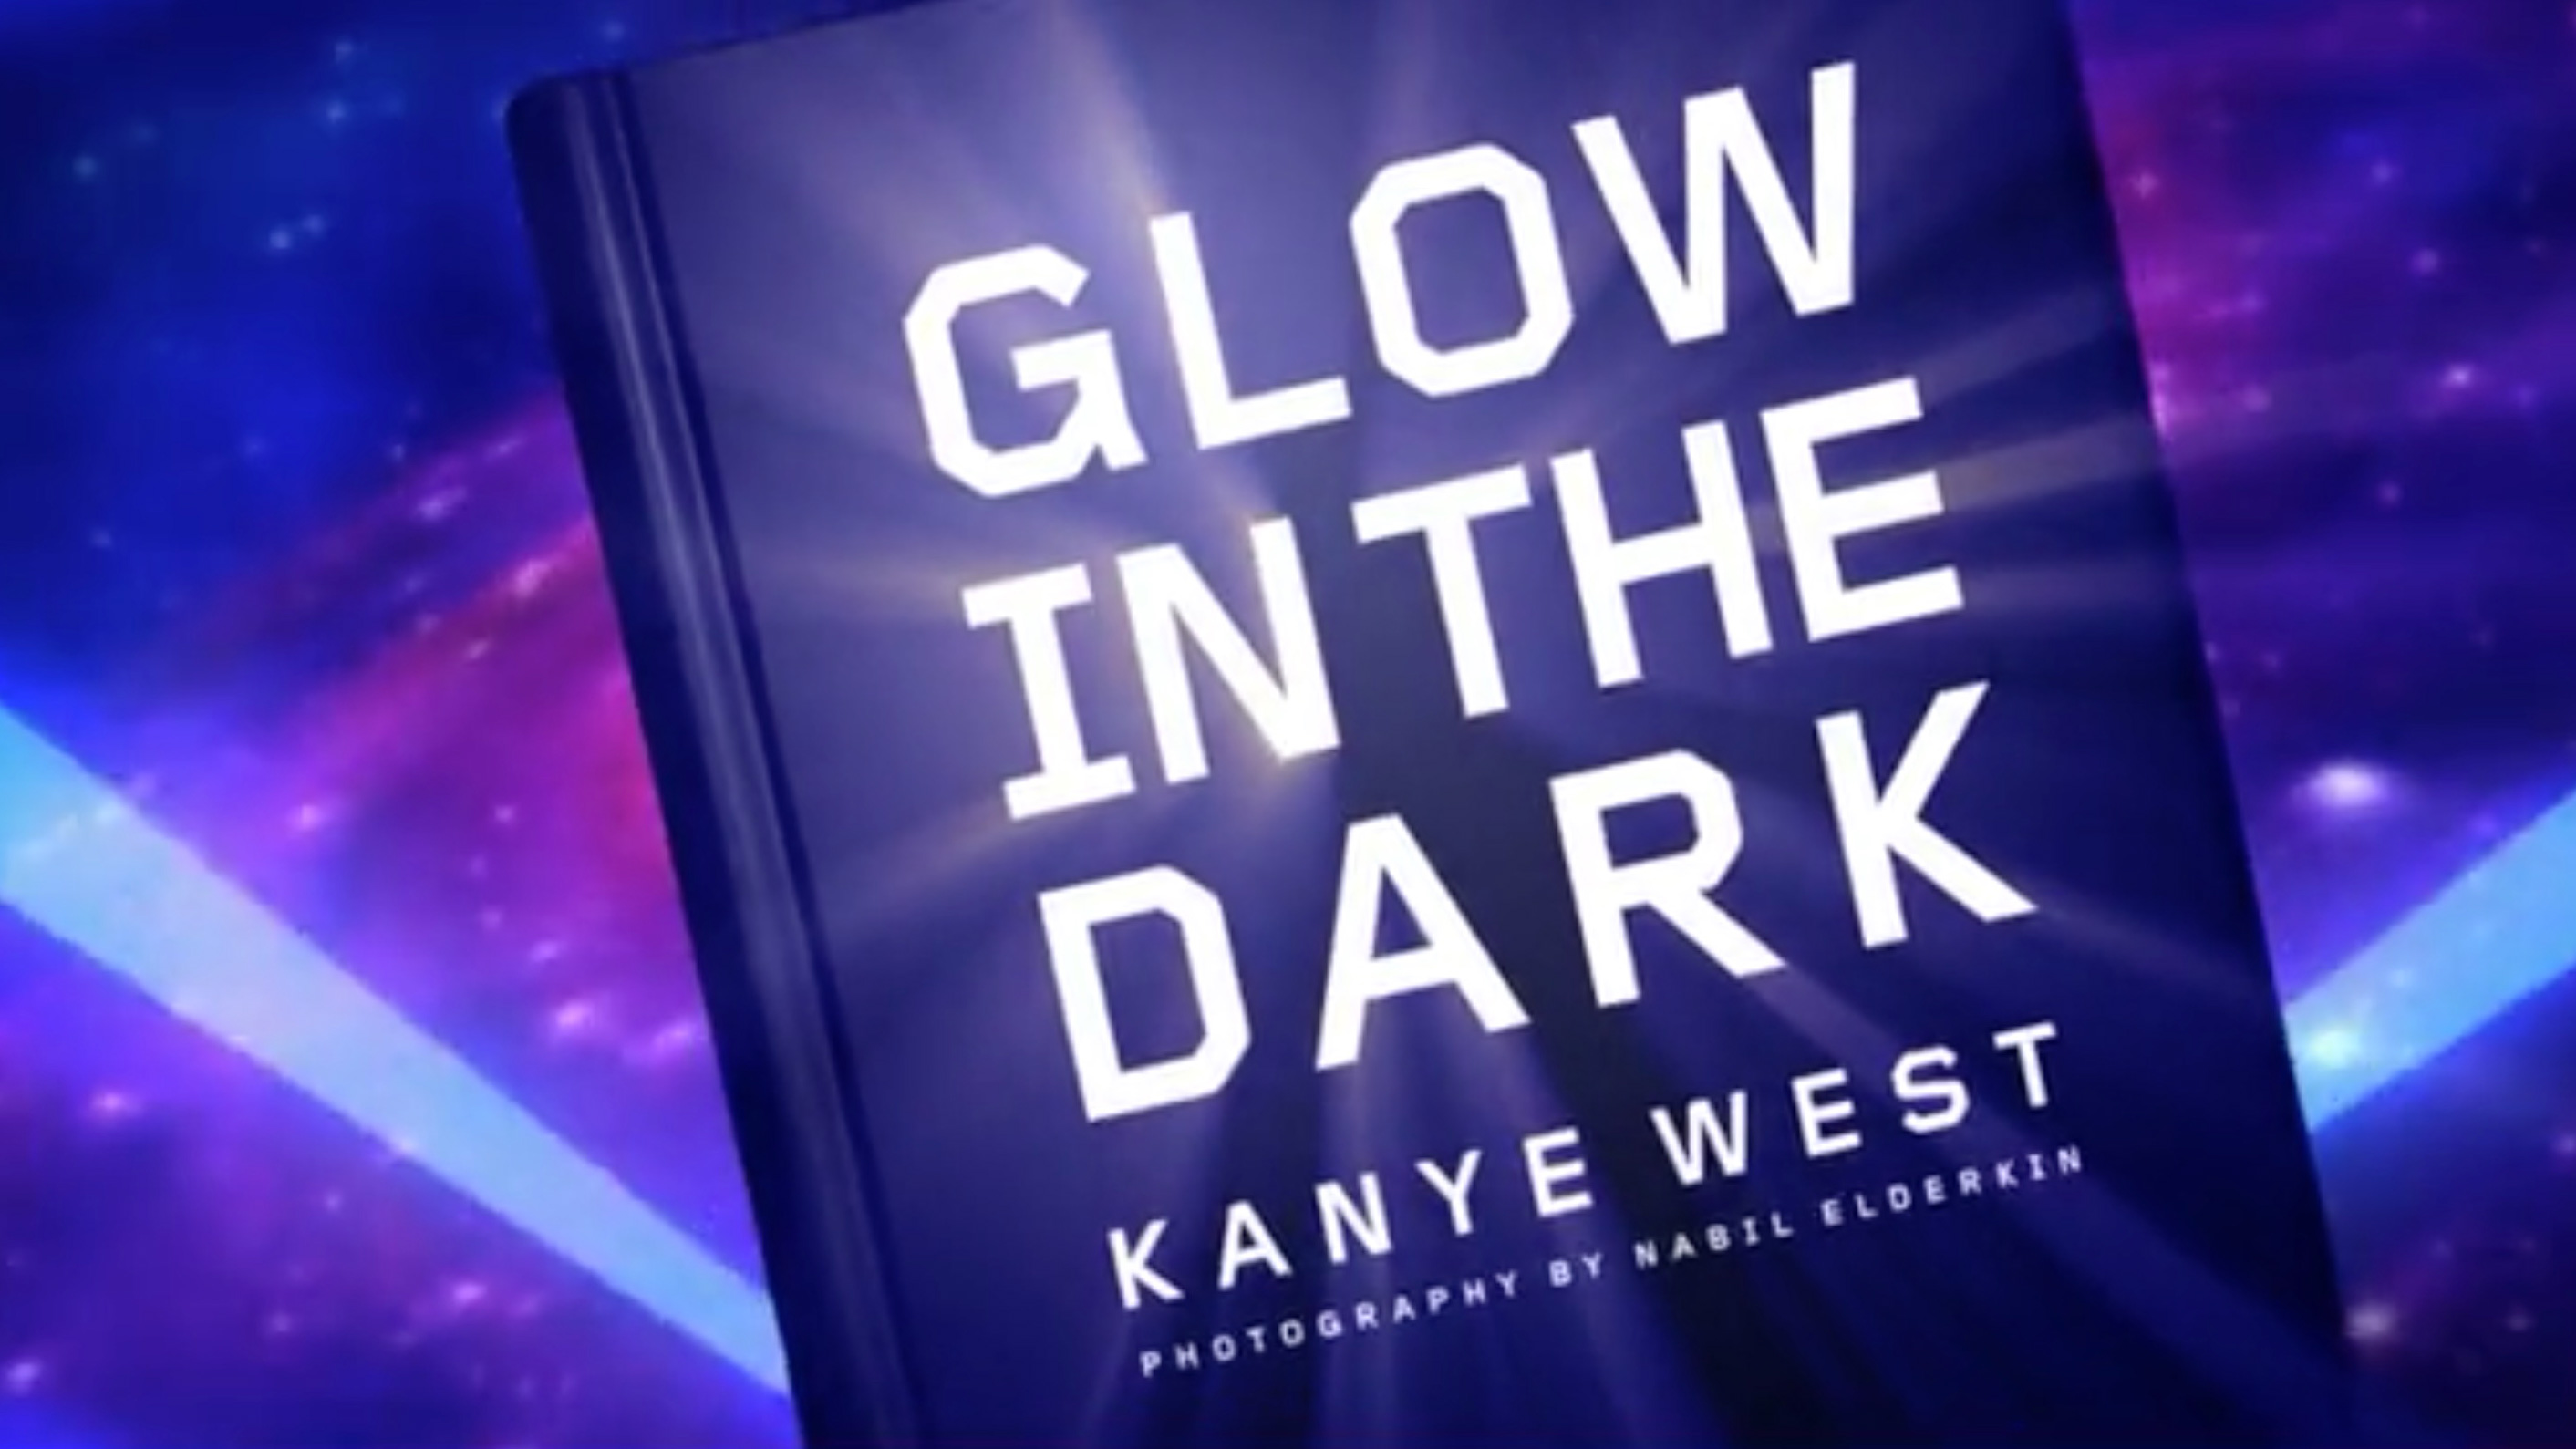 Kanye West - Glow in the dark book promo